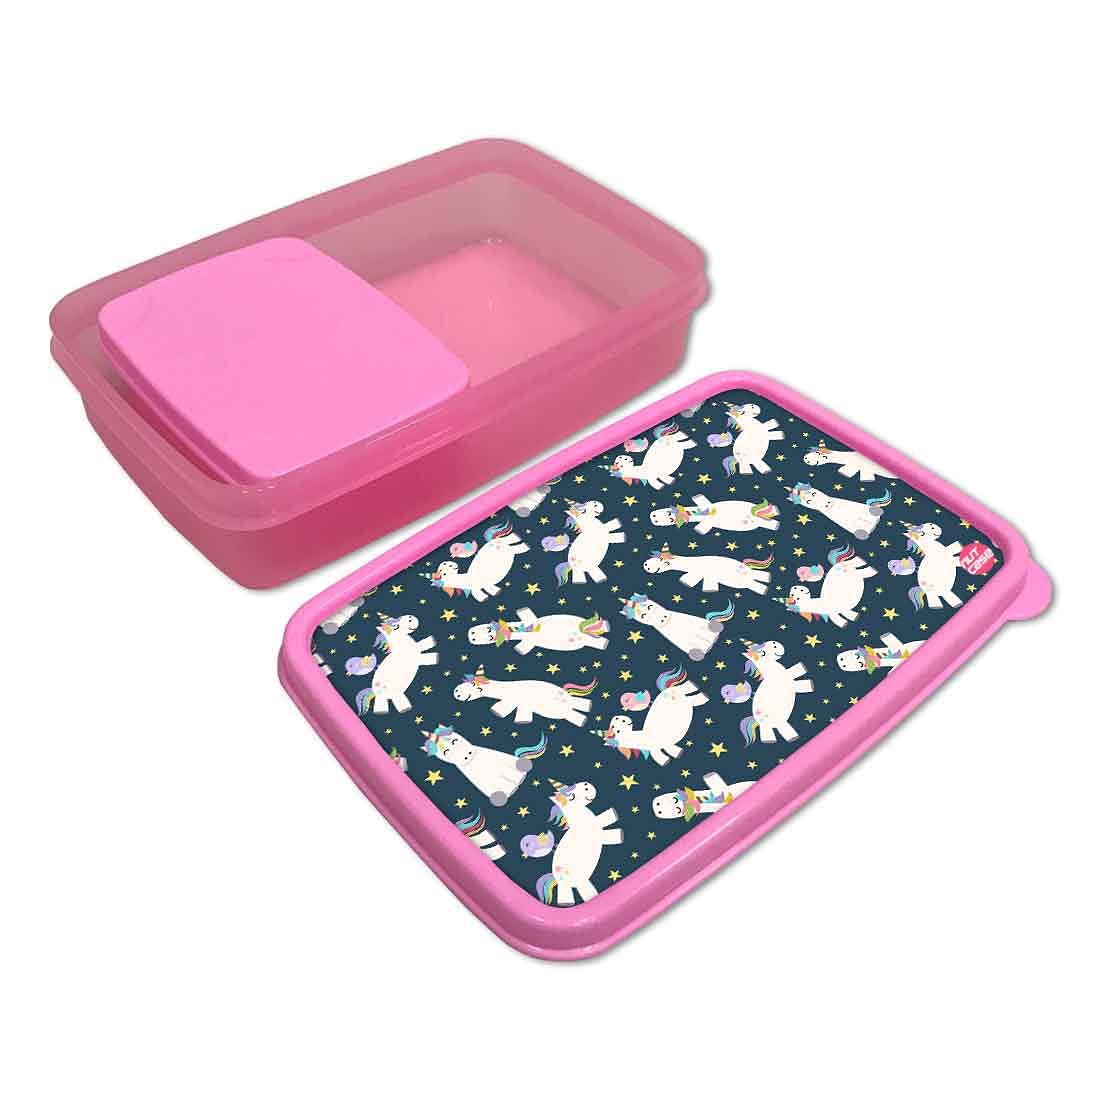 Designer Kids Chips Box for Girls School Lunch Box Organizer - White Unicorns Nutcase